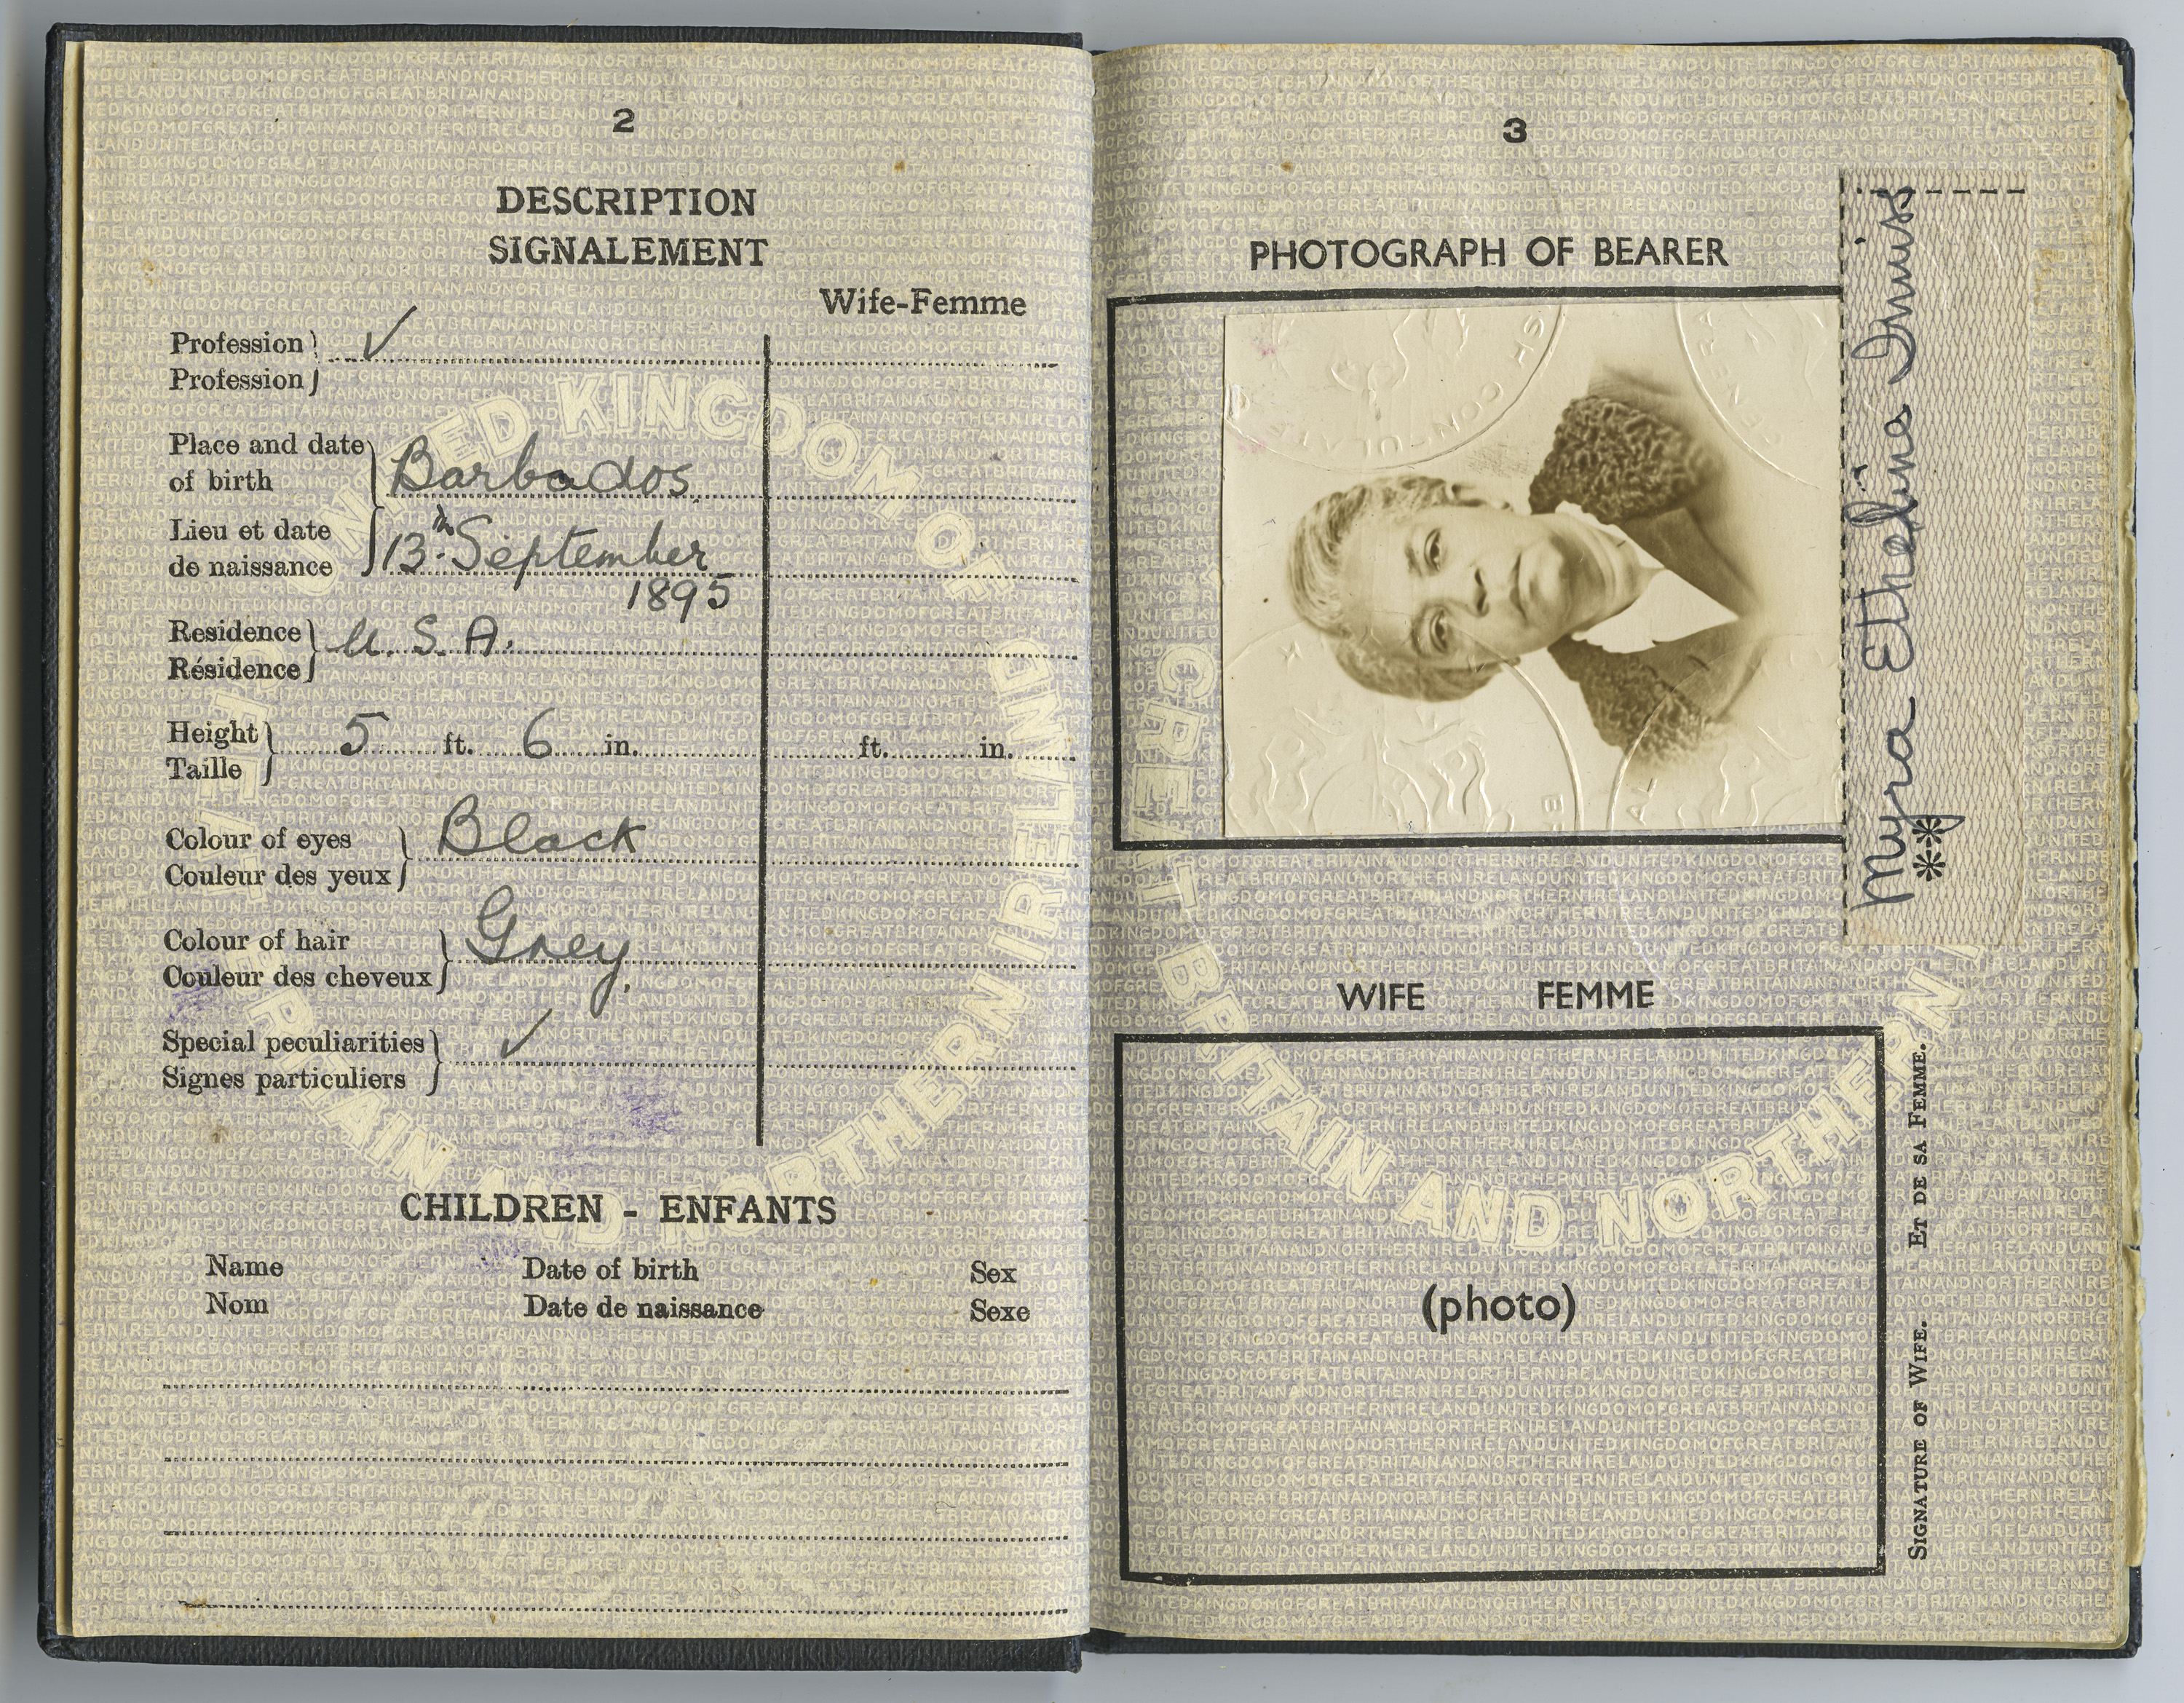 Inside 1950 passport.